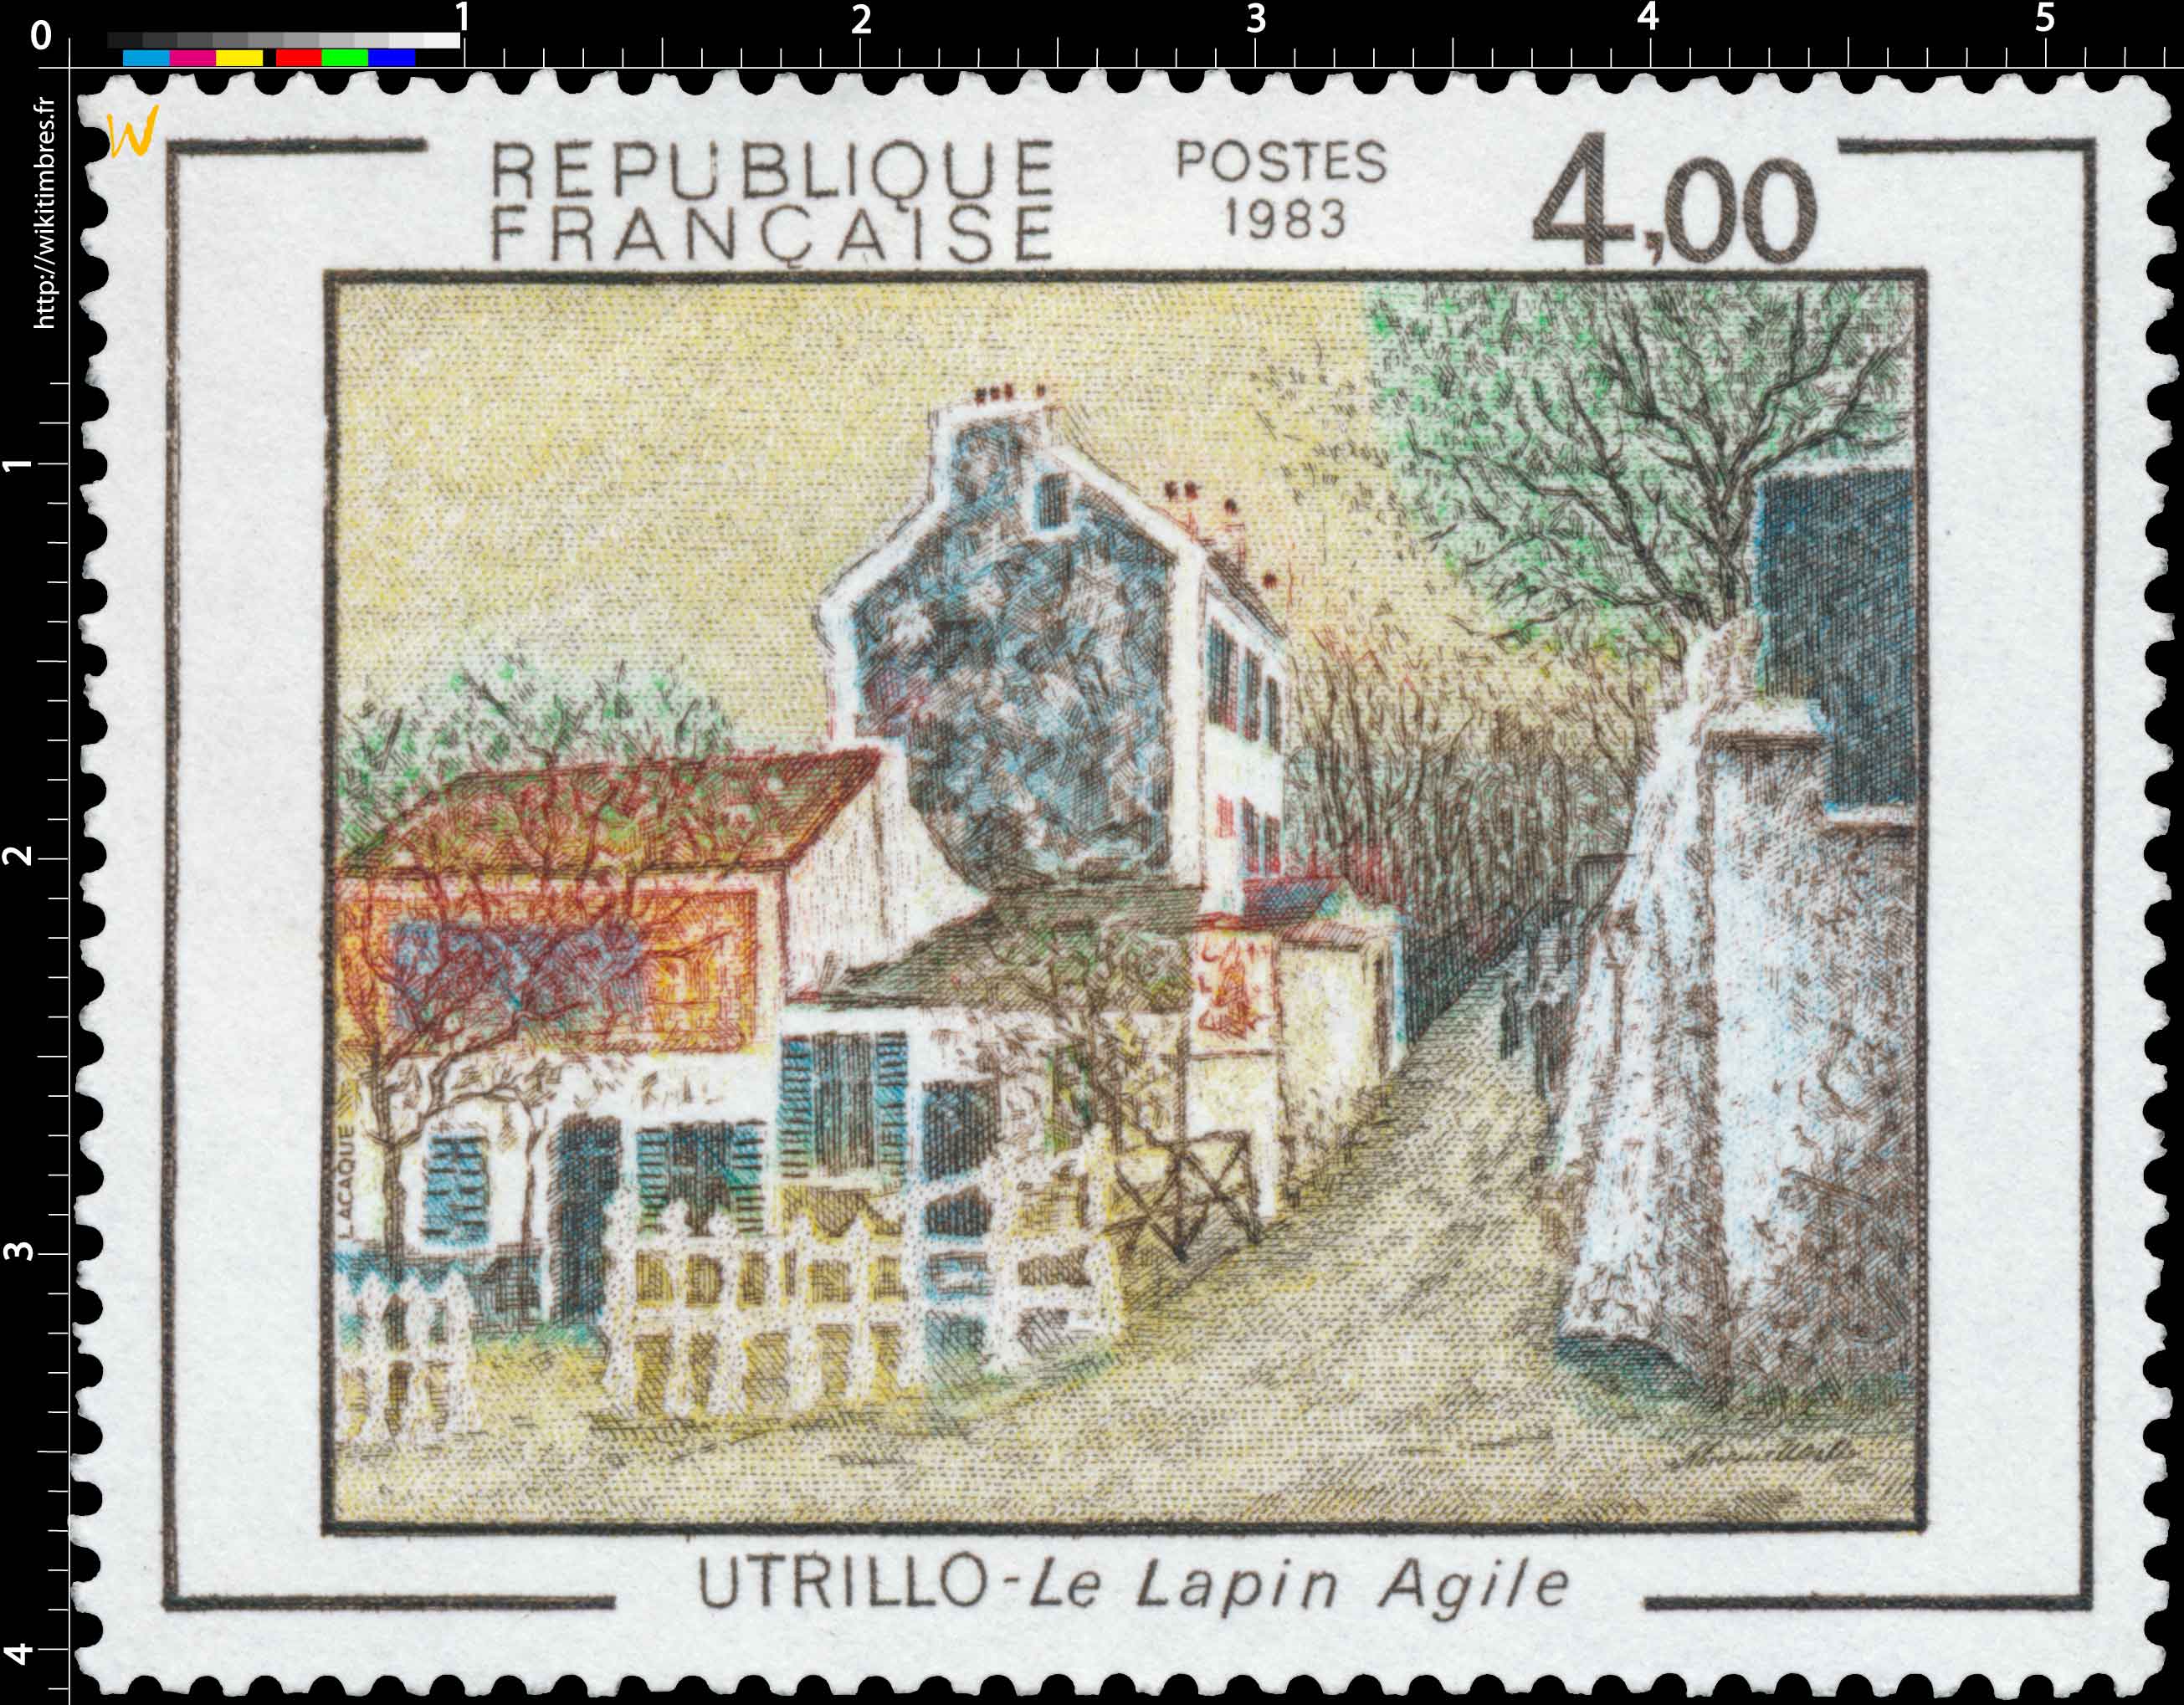 1983 UTRILLO - Le Lapin Agile